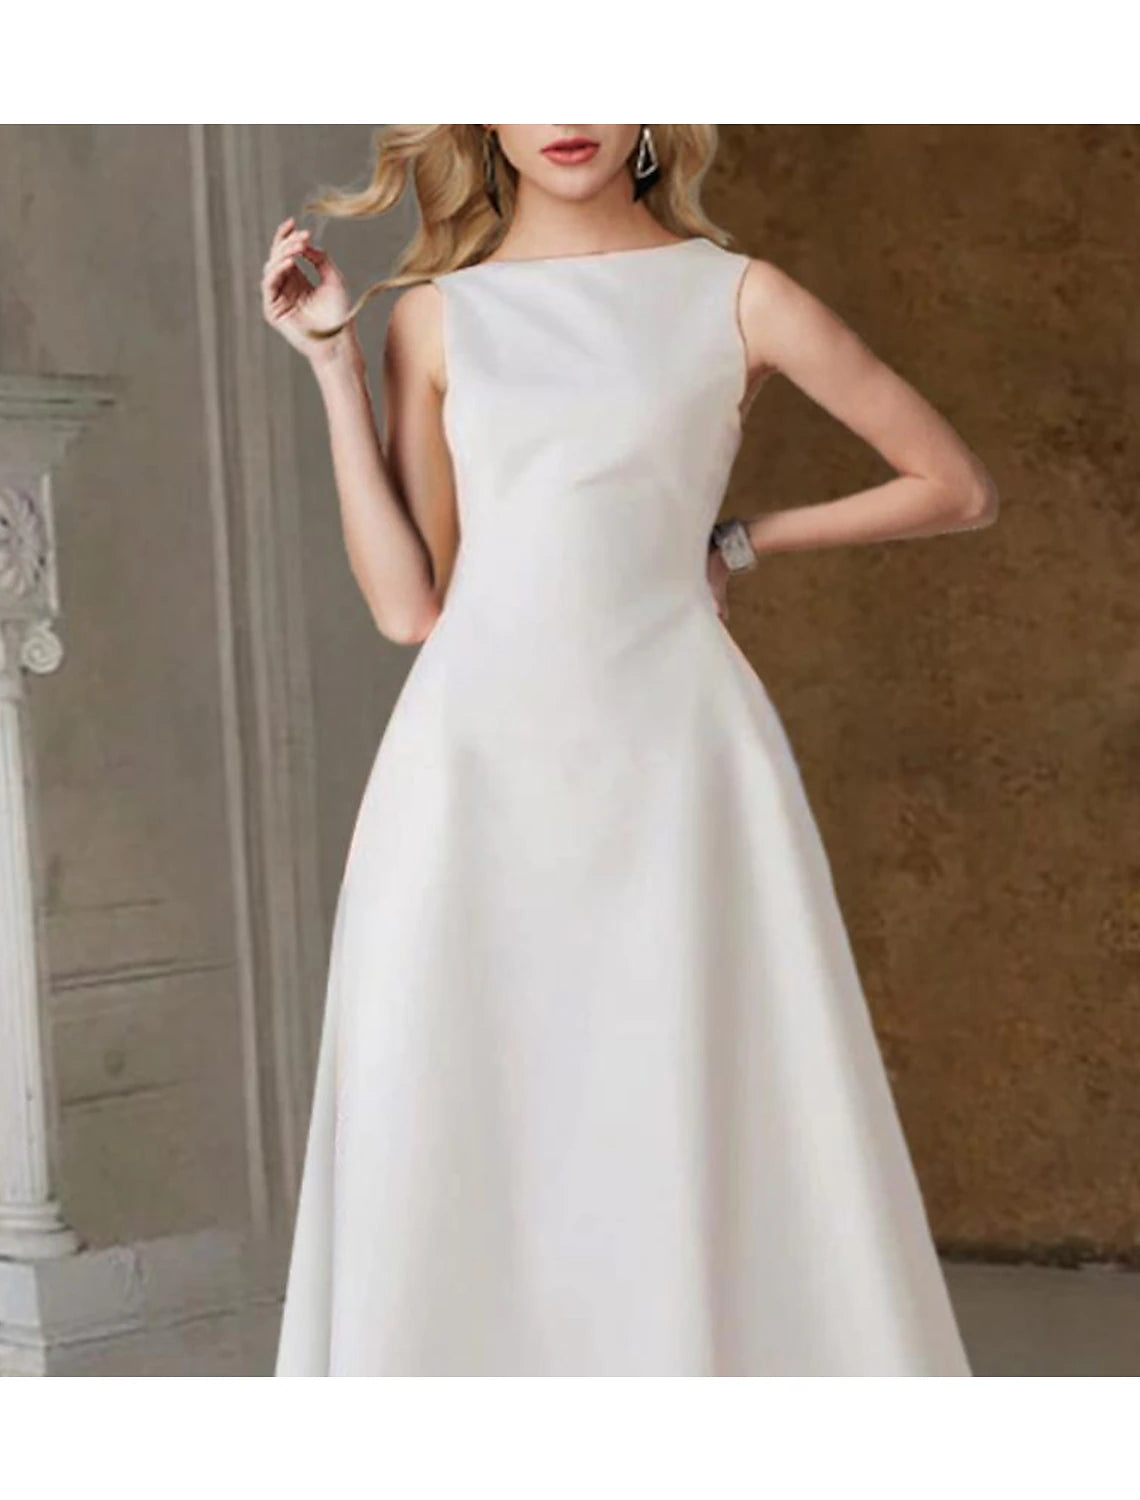 Bridal Shower Vintage Simple Wedding Dresses Wedding Dresses Sheath / Column Square Half Sleeve Tea Length Satin Bridal Gowns With Solid Color